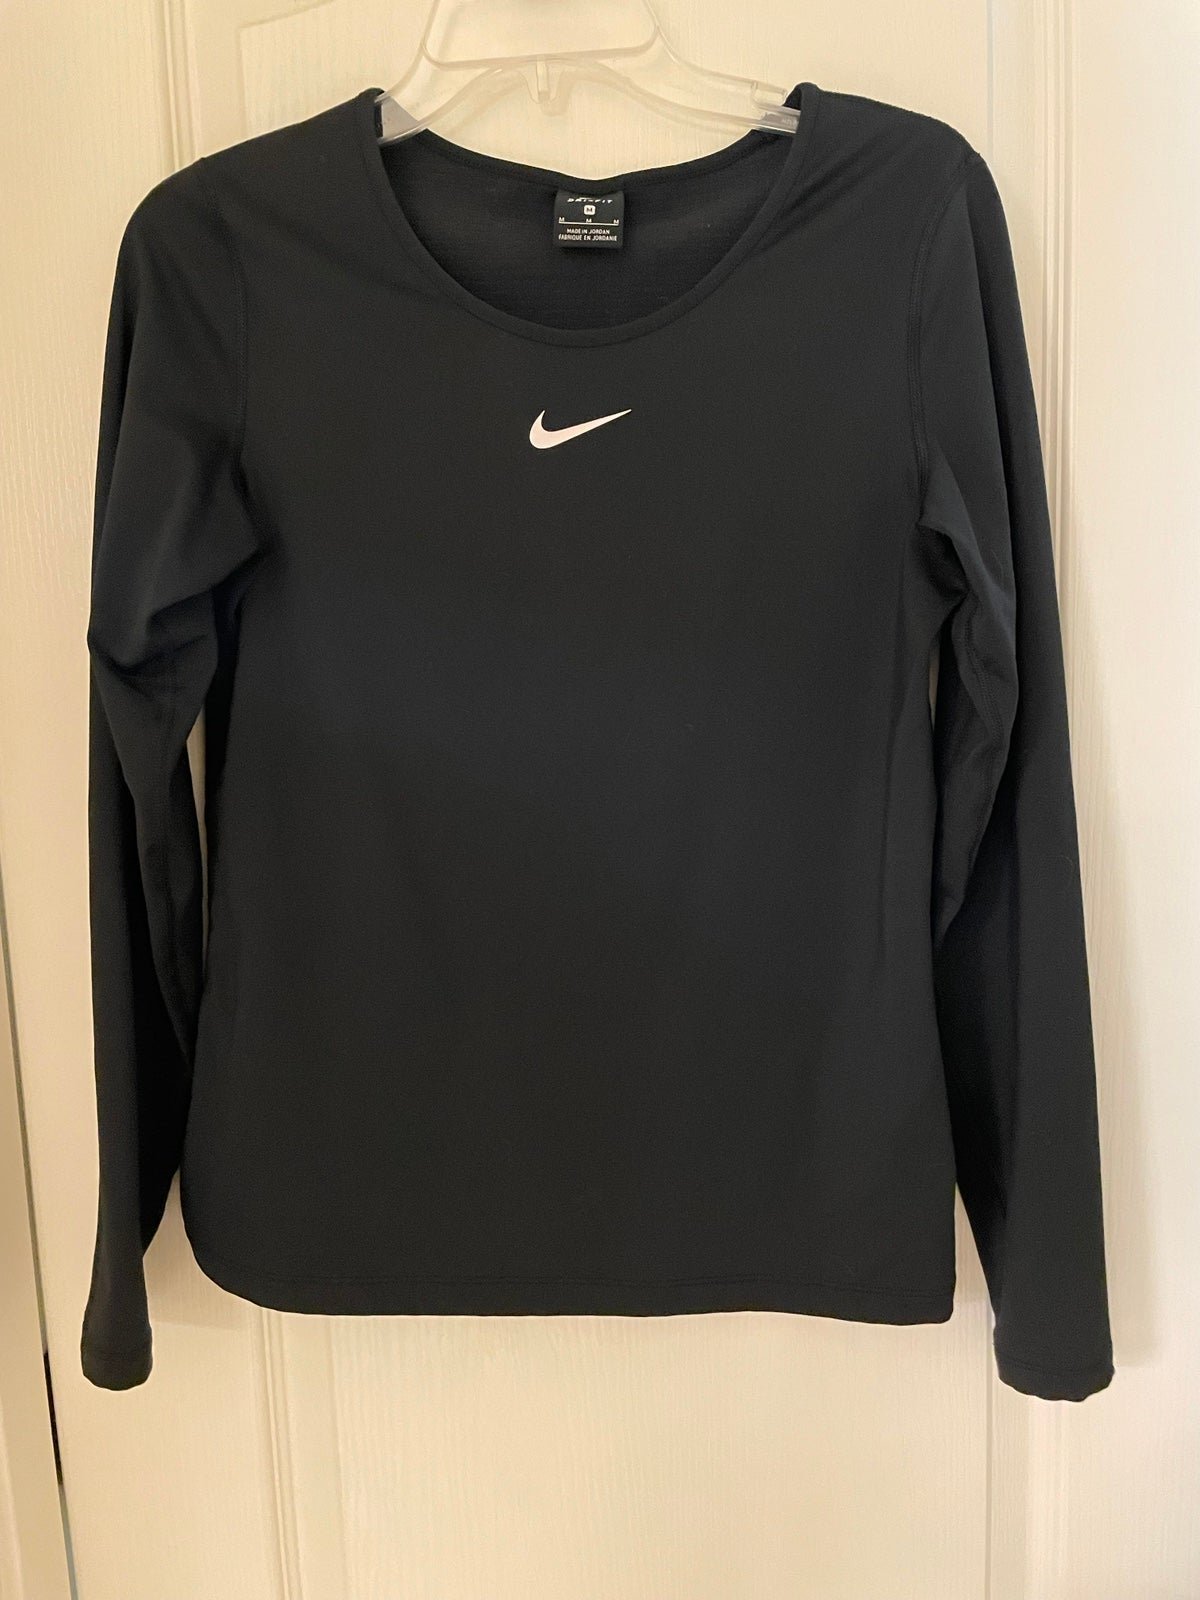 big discount Nike Womens Long Sleeve Dri Fit Shirt size M OKOzxomxJ no tax